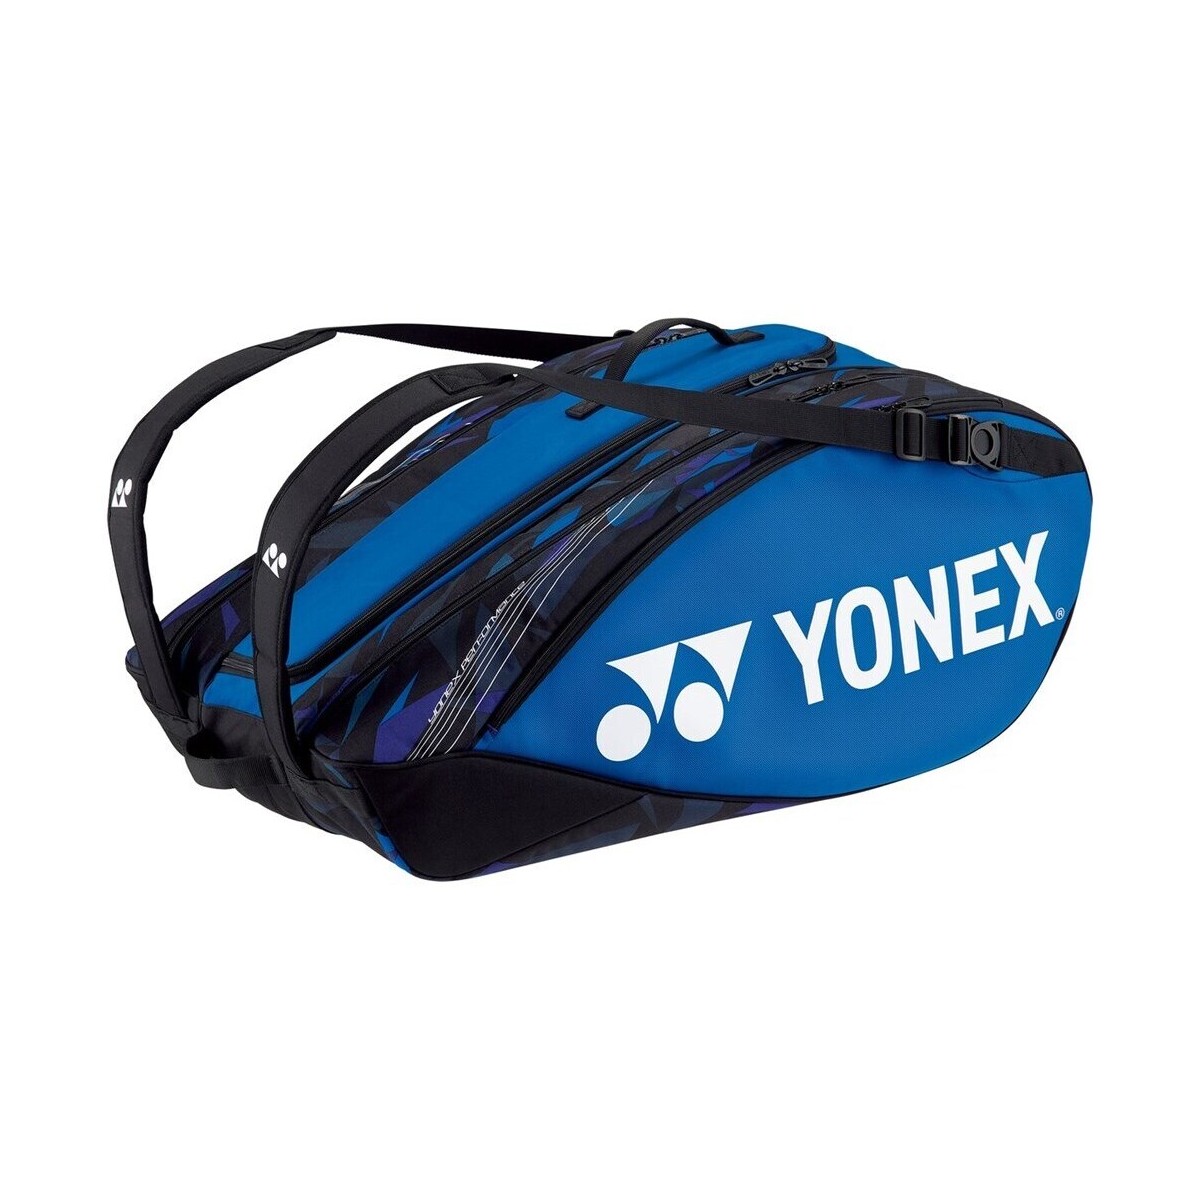 Taška Tašky Yonex Thermobag 922212 Pro Racket Bag 12R Tmavomodré, Modré